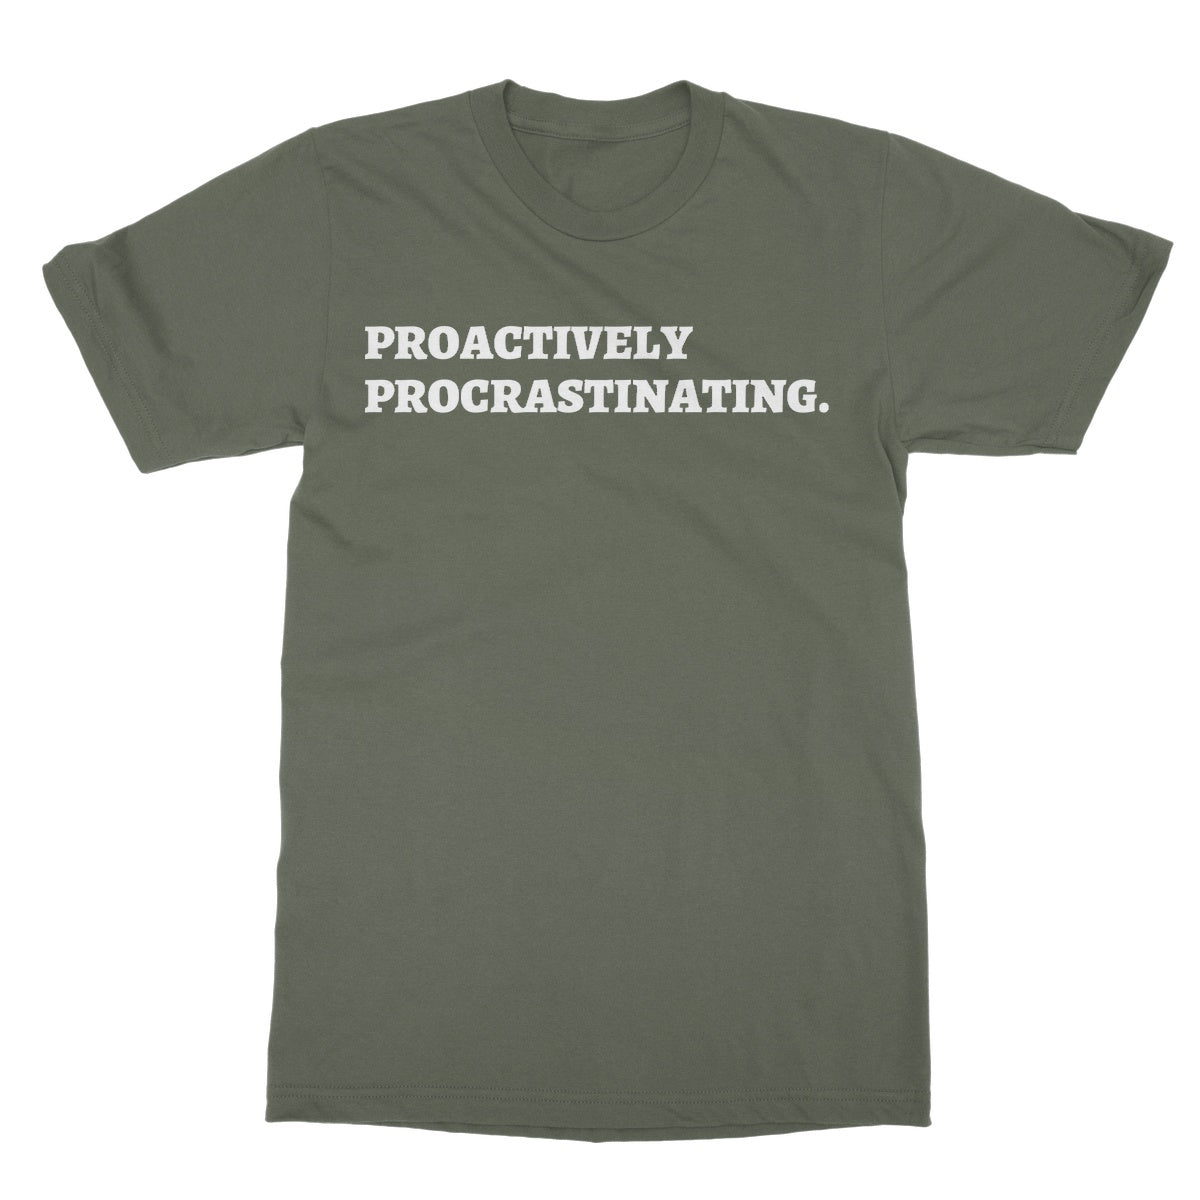 proactively procrastinating t shirt green